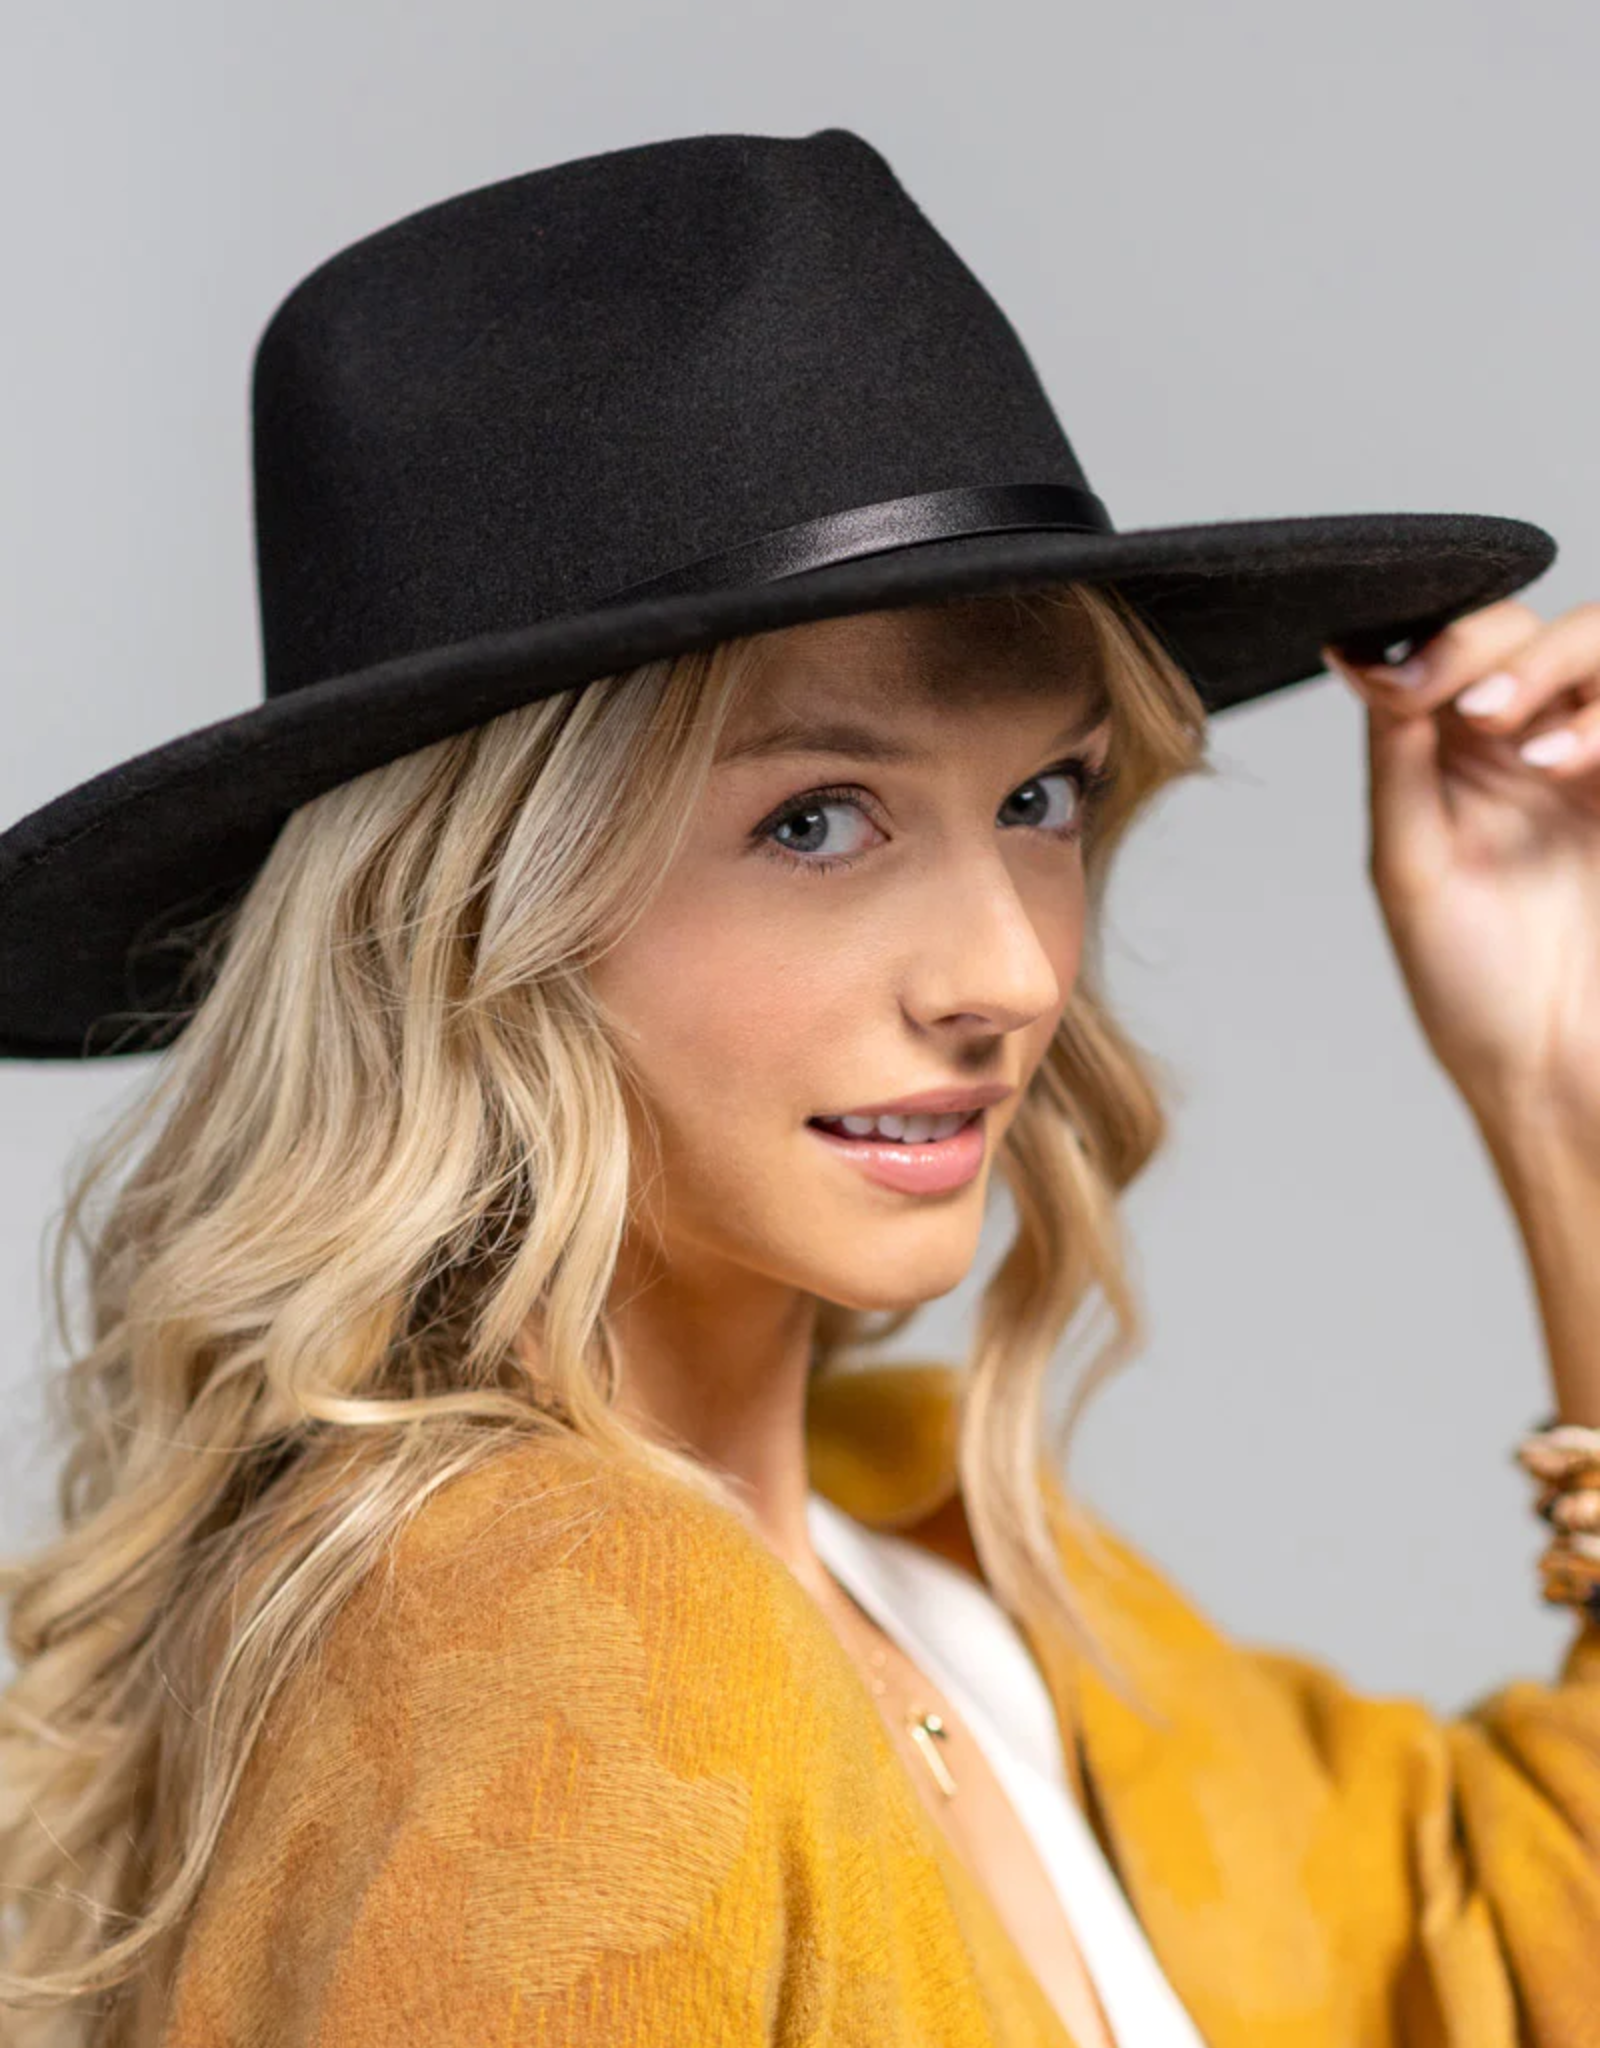 The Megan Wool Hat-Black